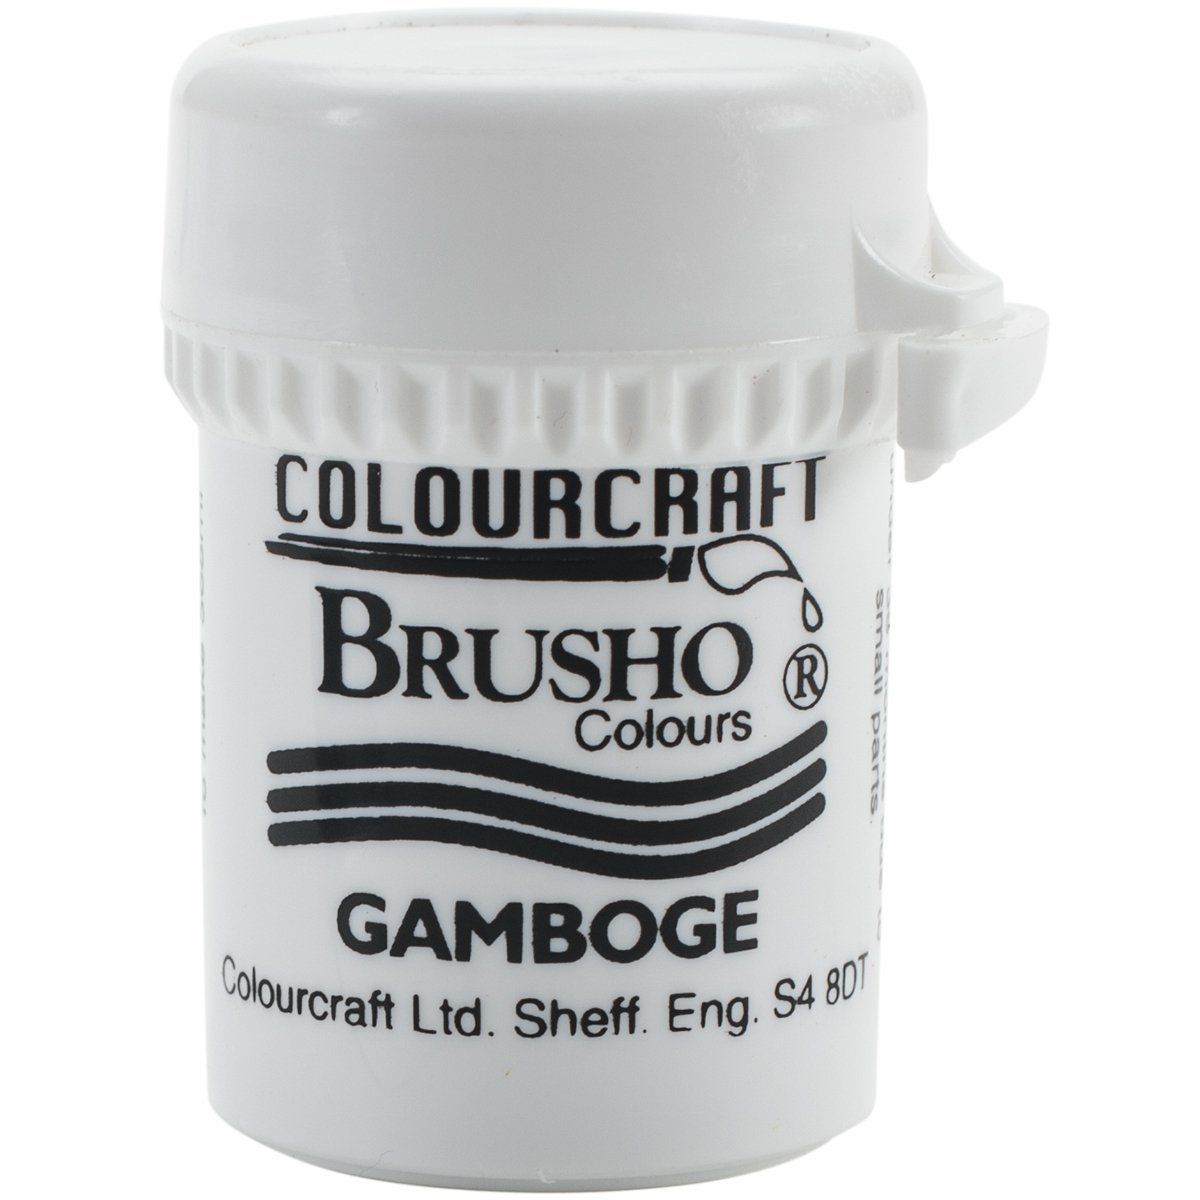 Brusho Crystal Colours - Gamboge 15 gm